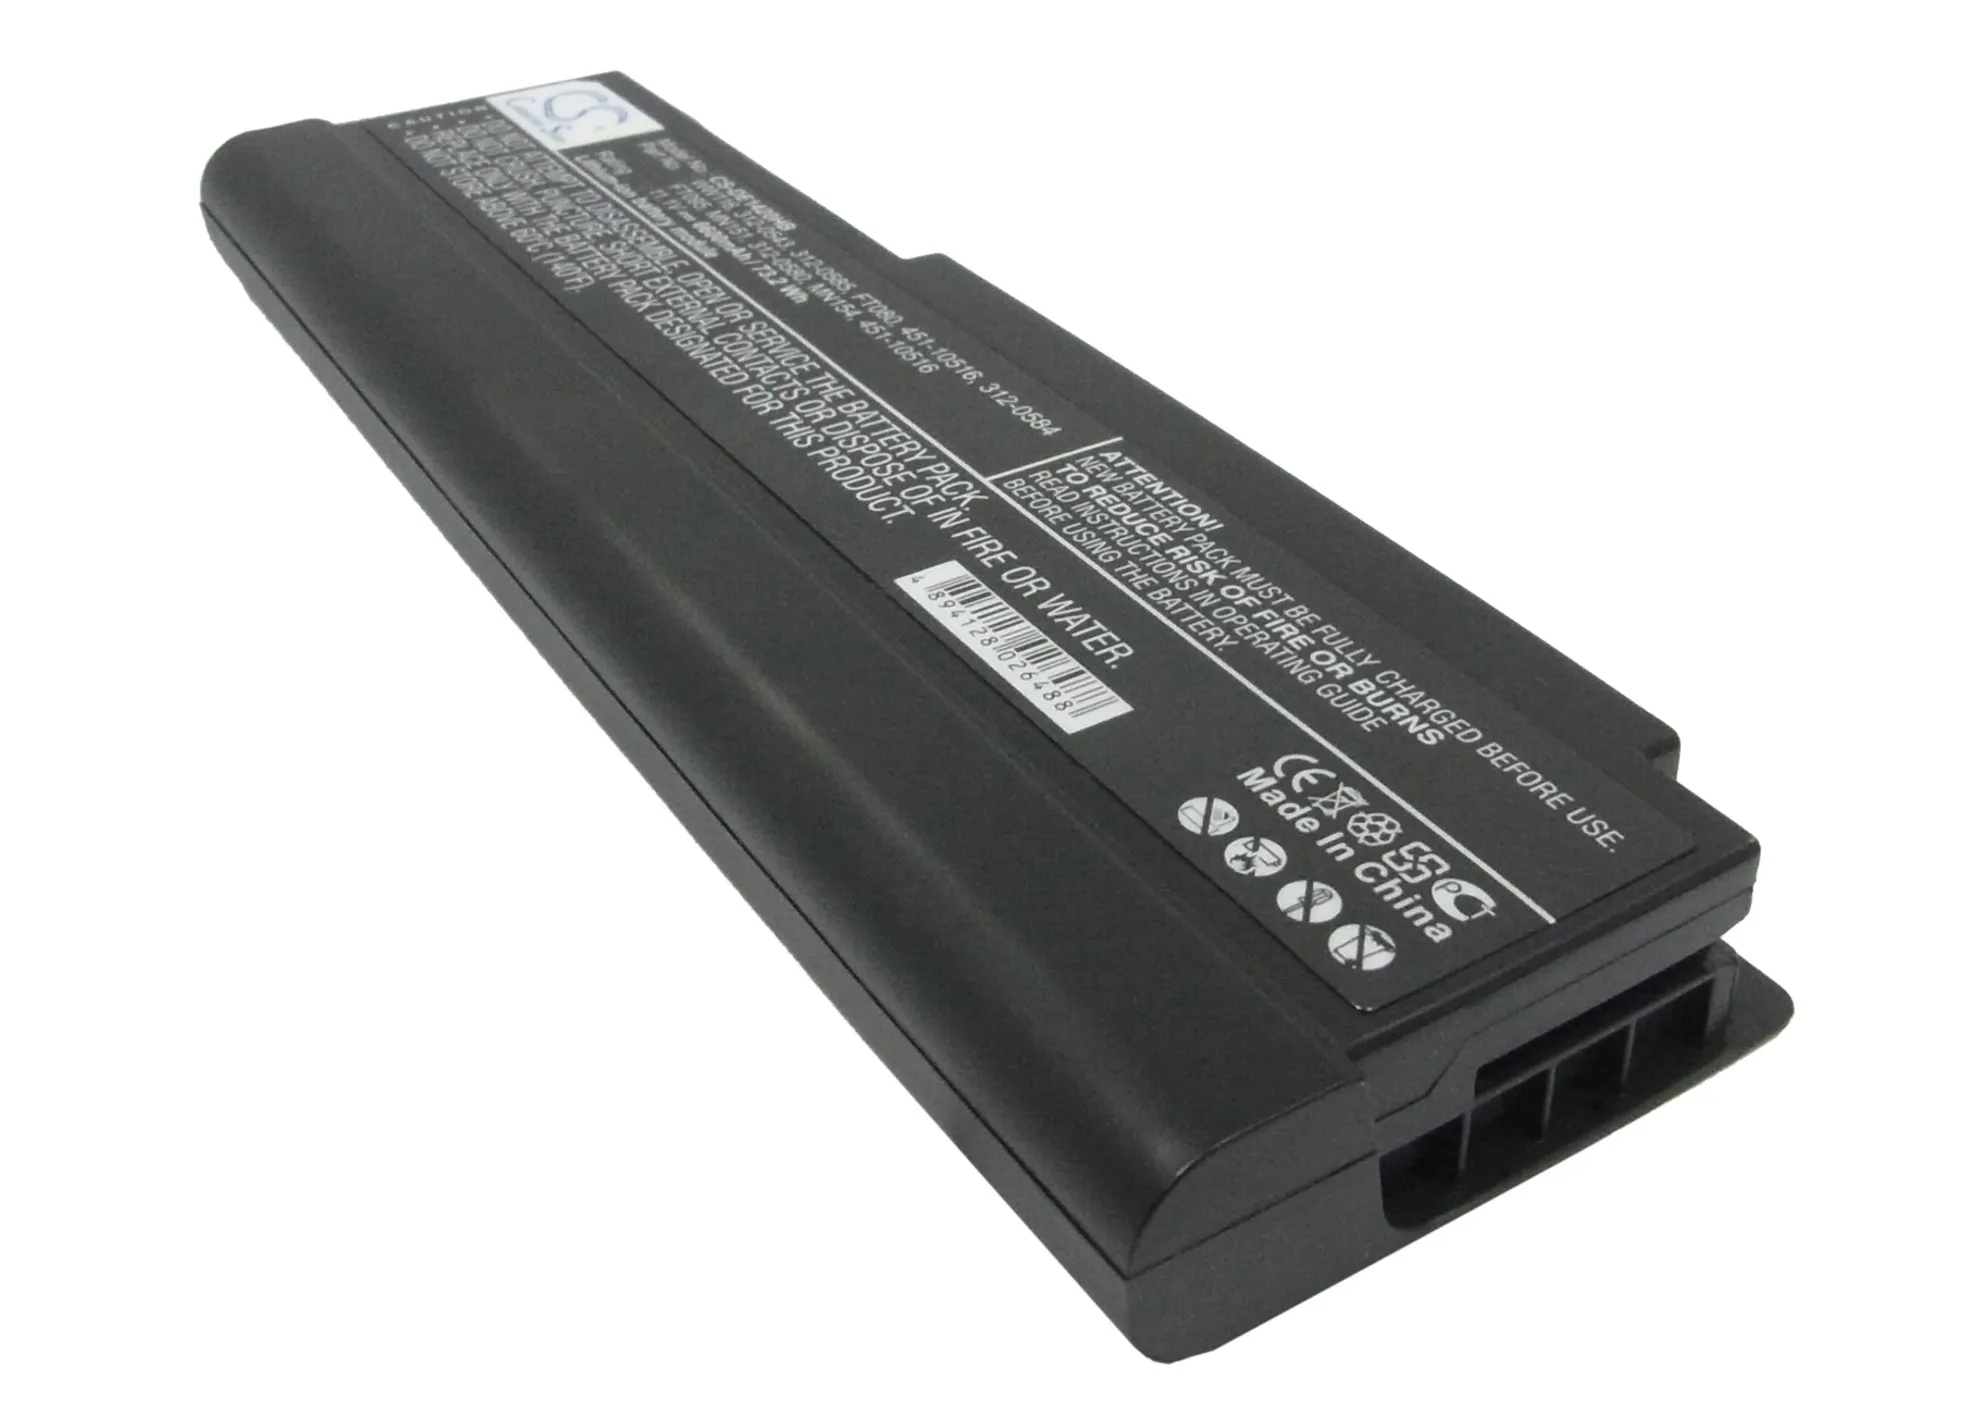 

CS 6600mAh battery for DELL Inspiron 1420,Vostro 1400 312-0543,312-0580,312-0584,312-0585,451-10516,FT080,FT095,